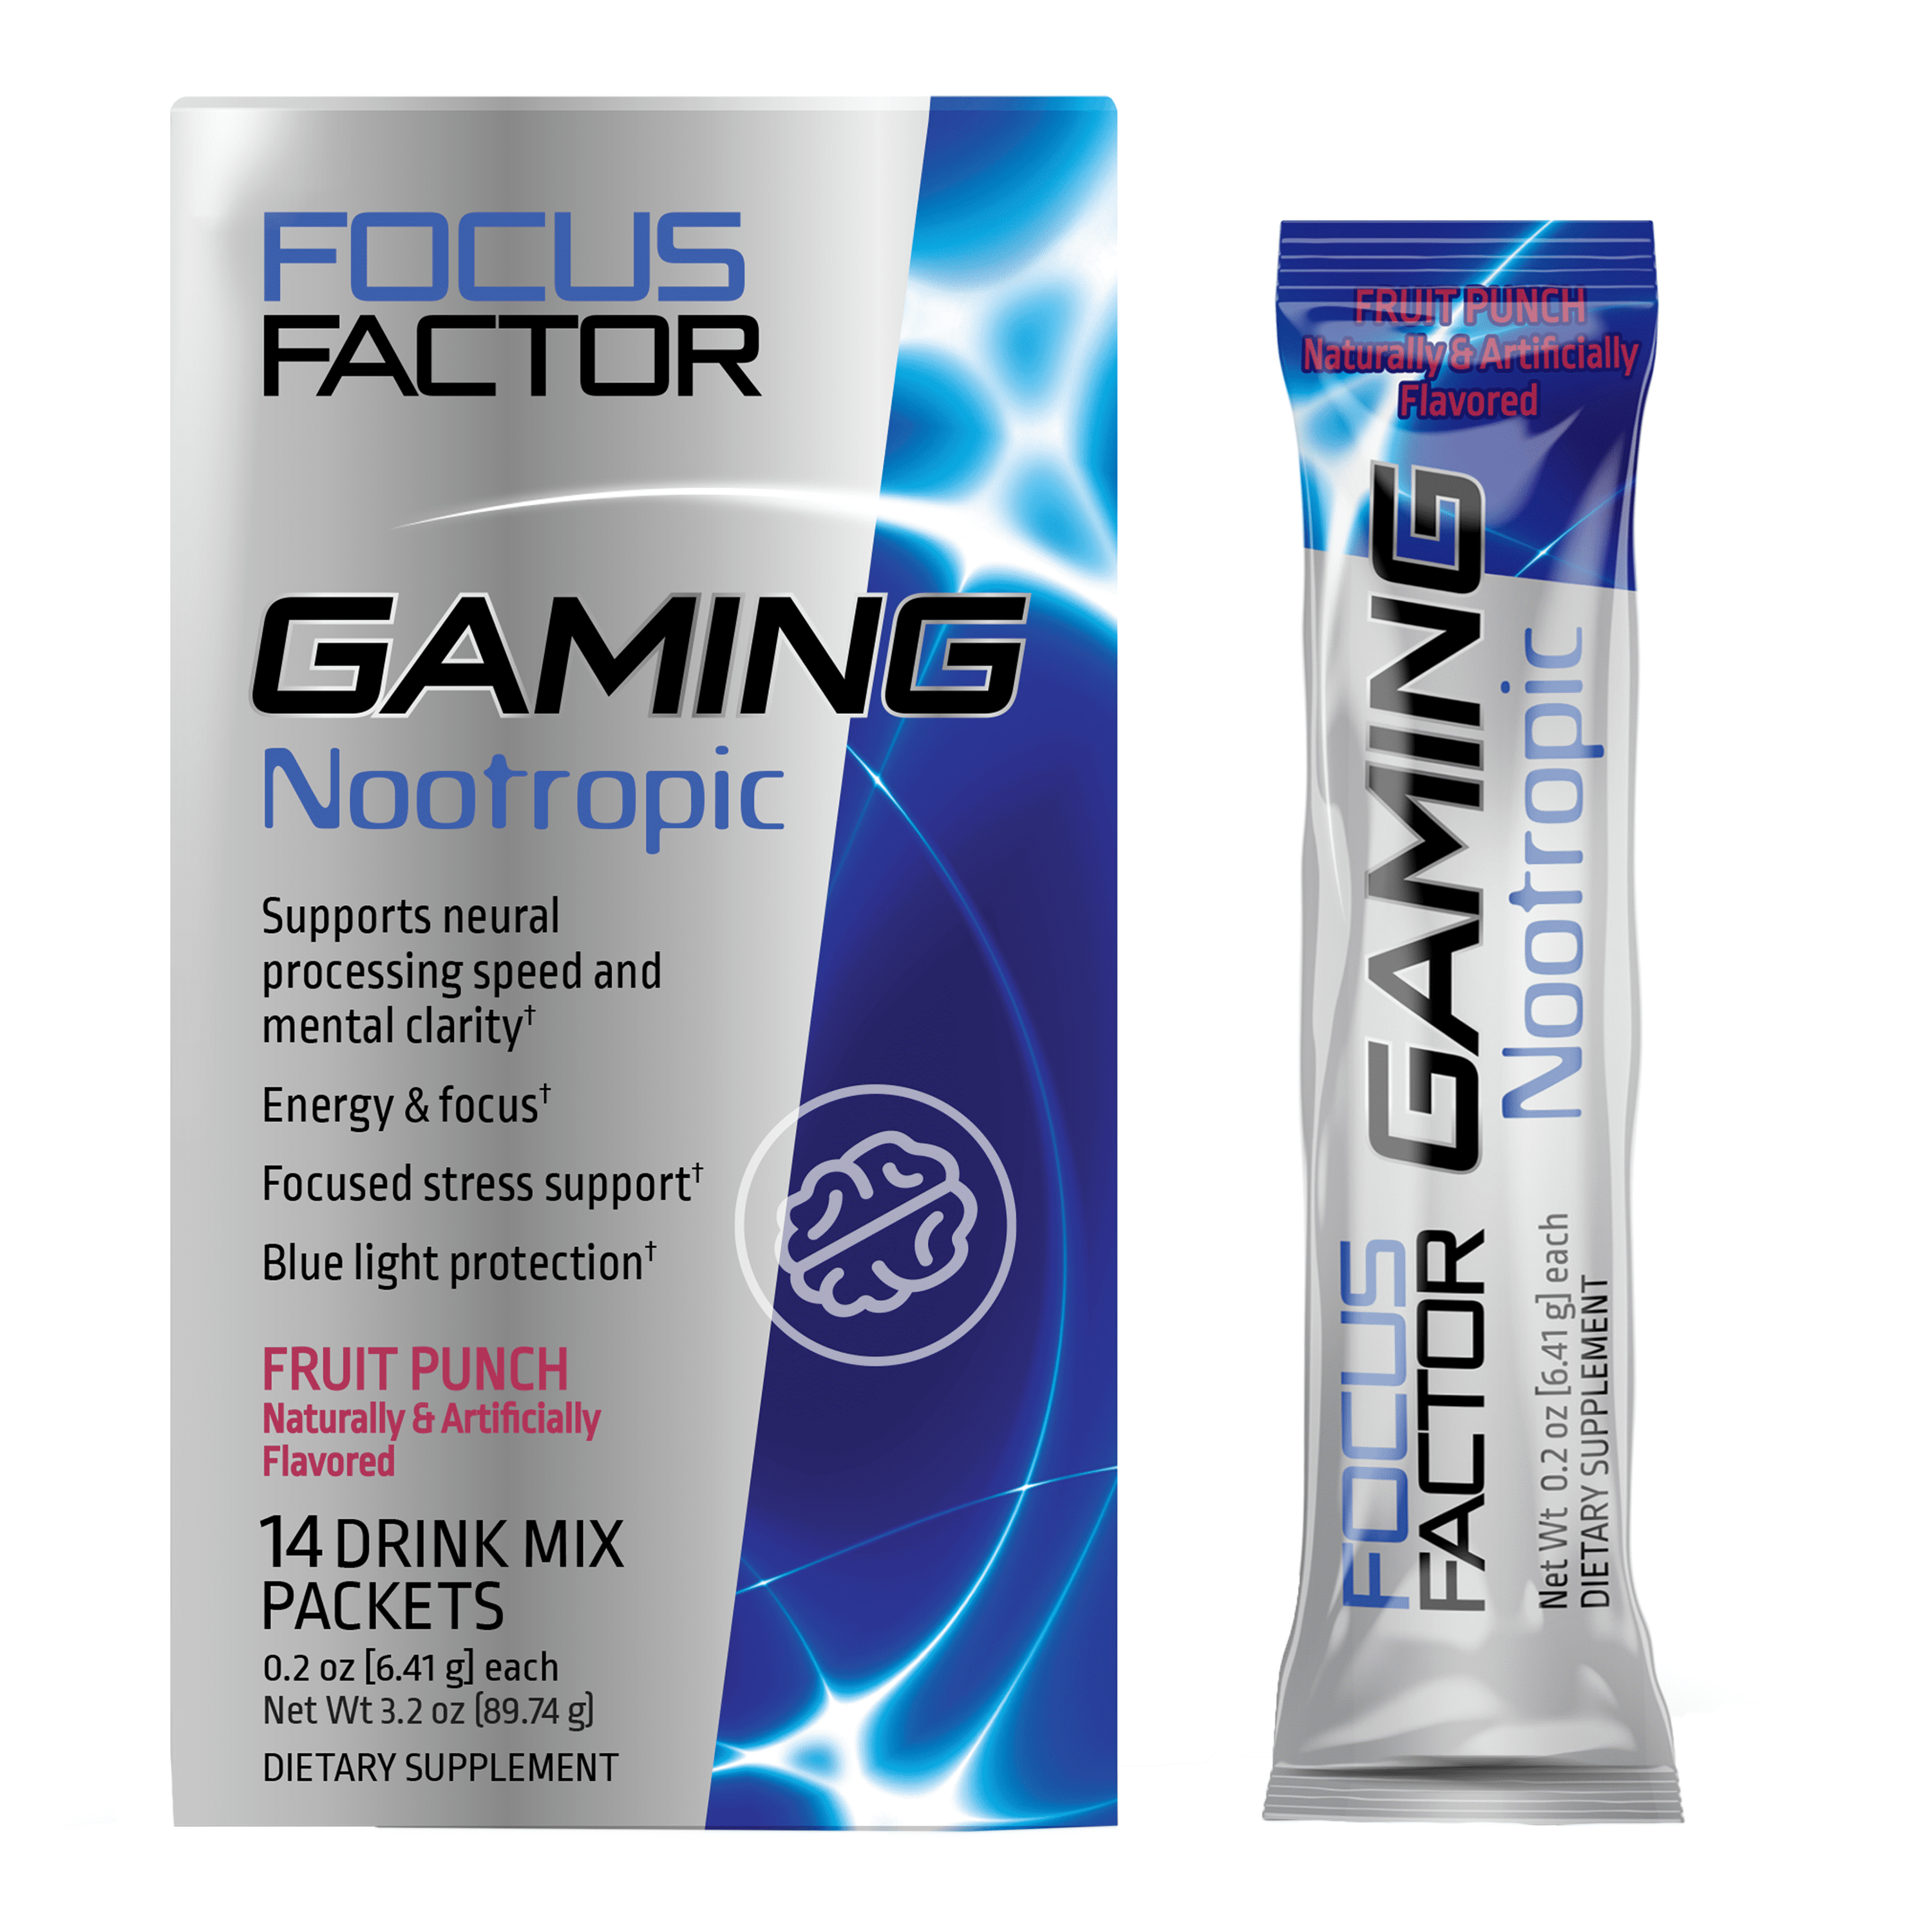 Focus-Factor-Gaming-Nootropic-Supplement